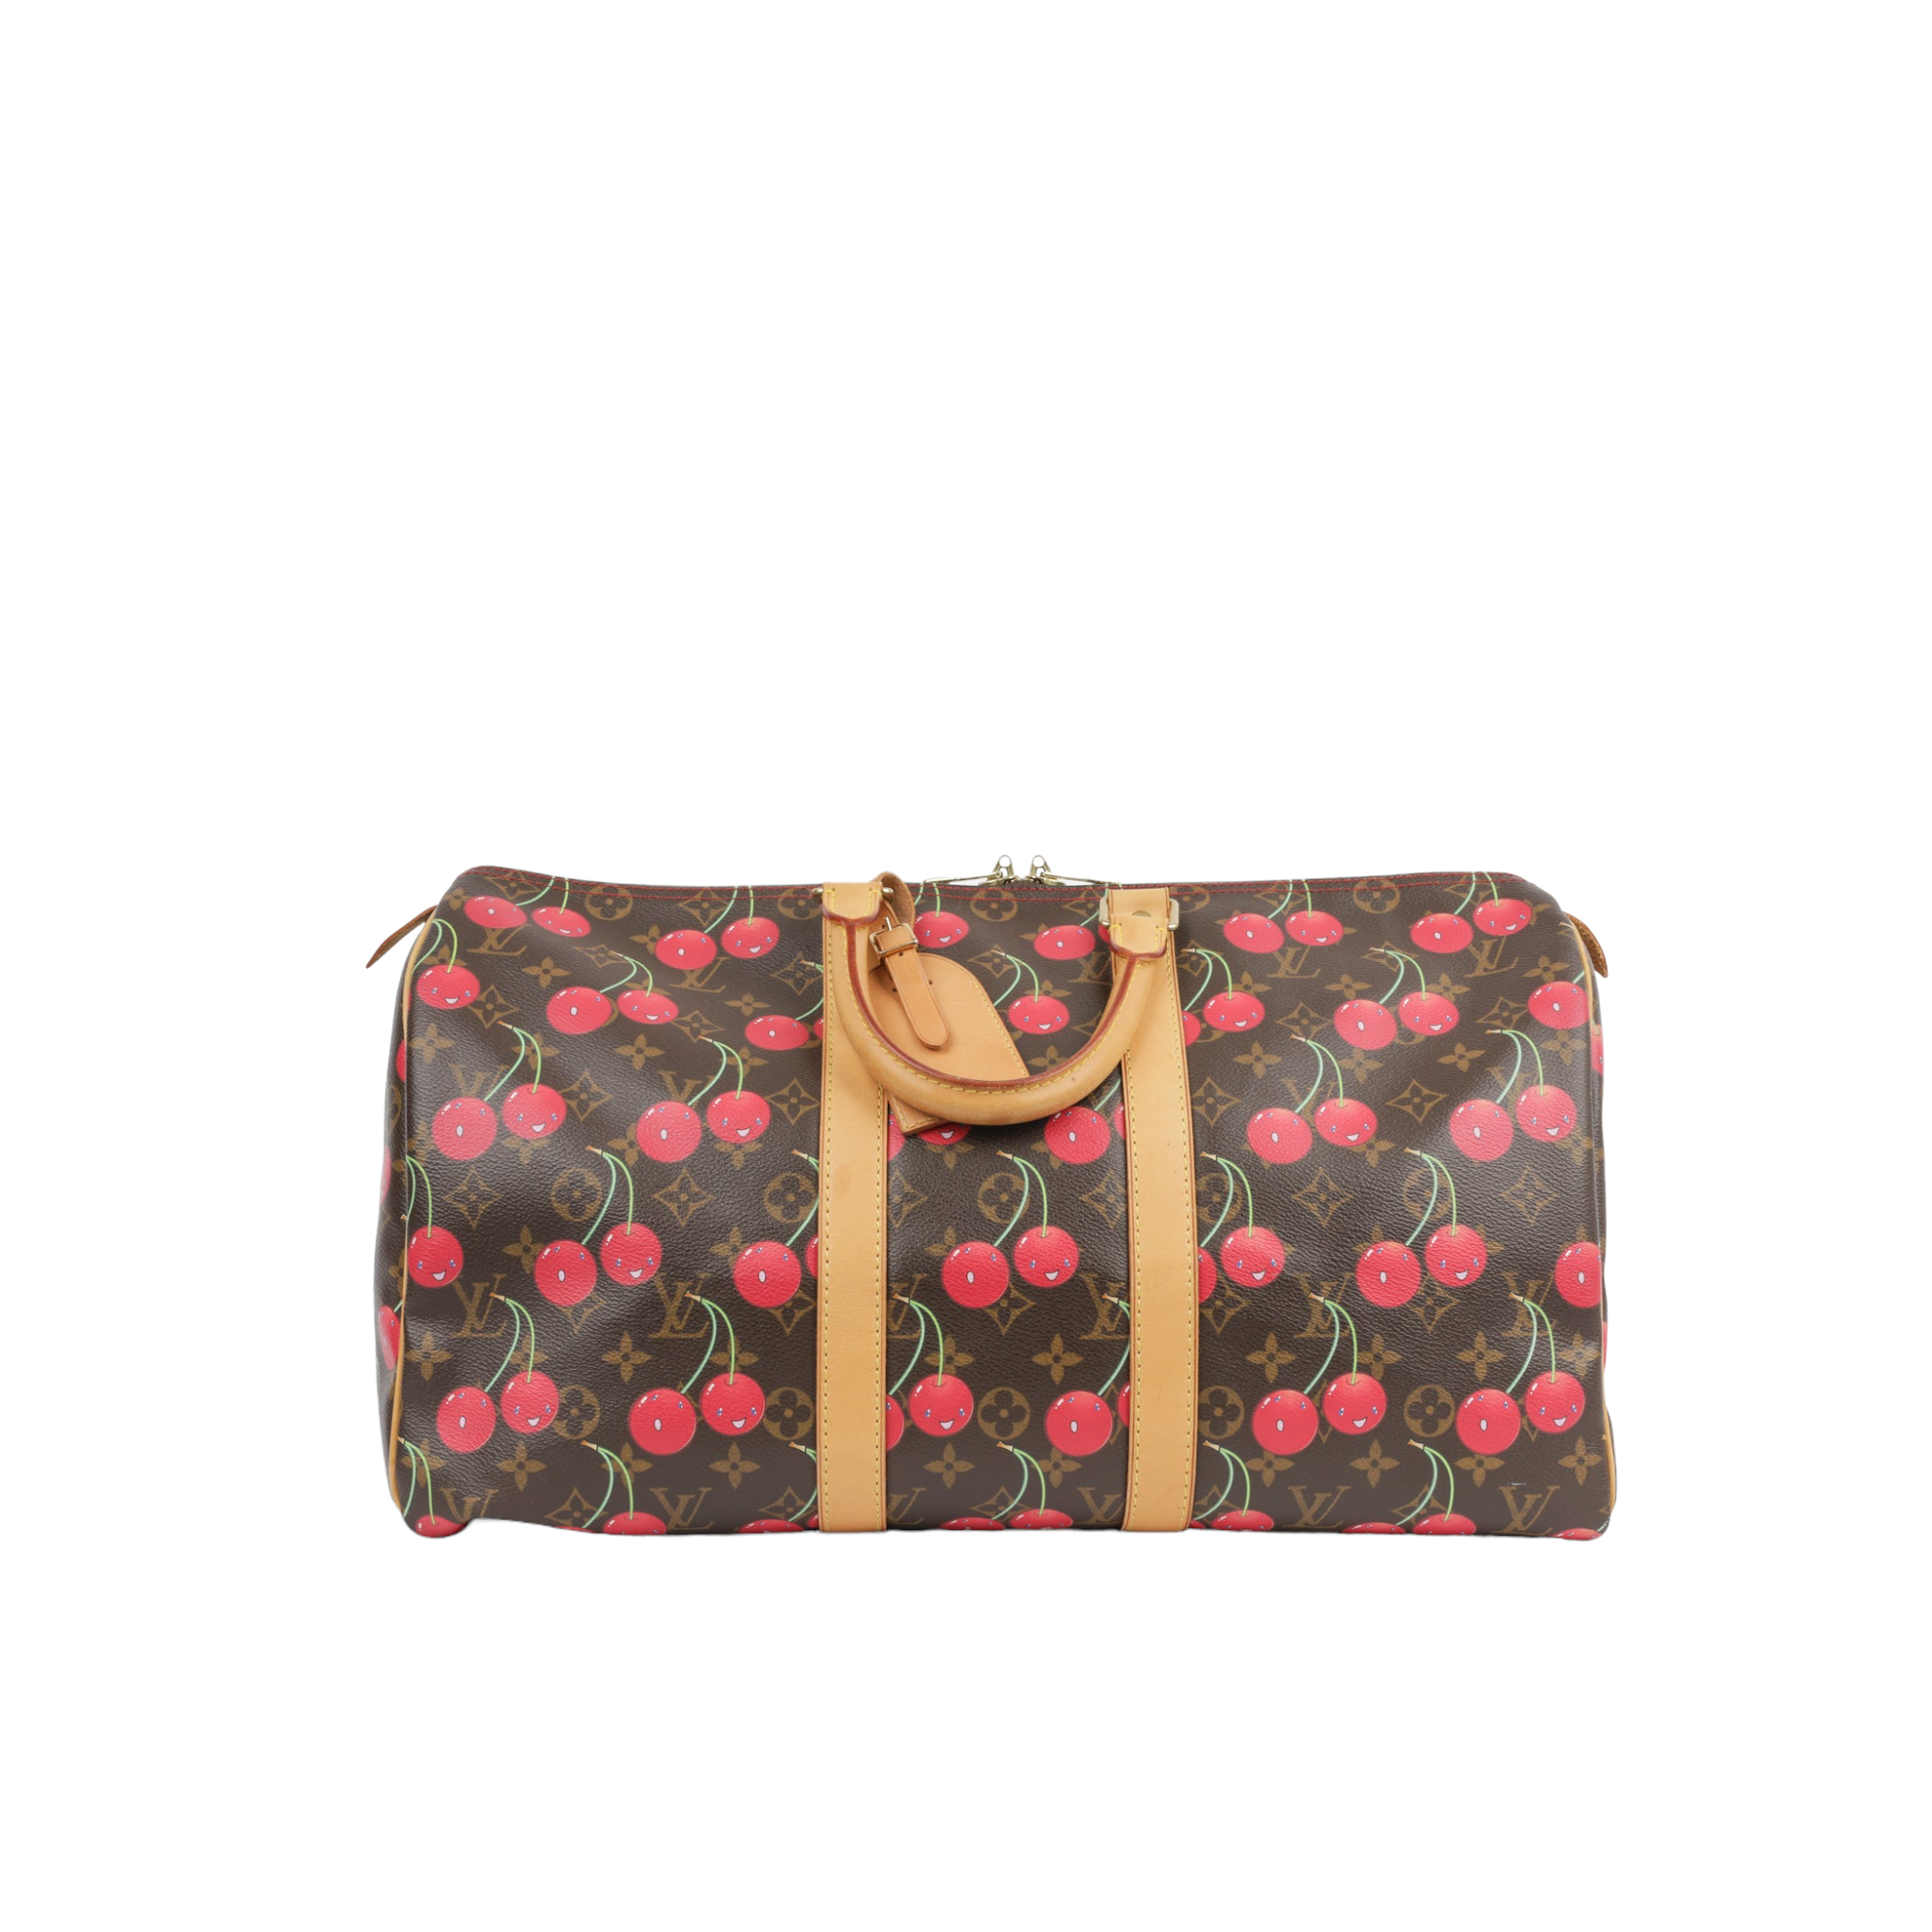 Louis Vuitton Duffle Bag W/ Cherry Design